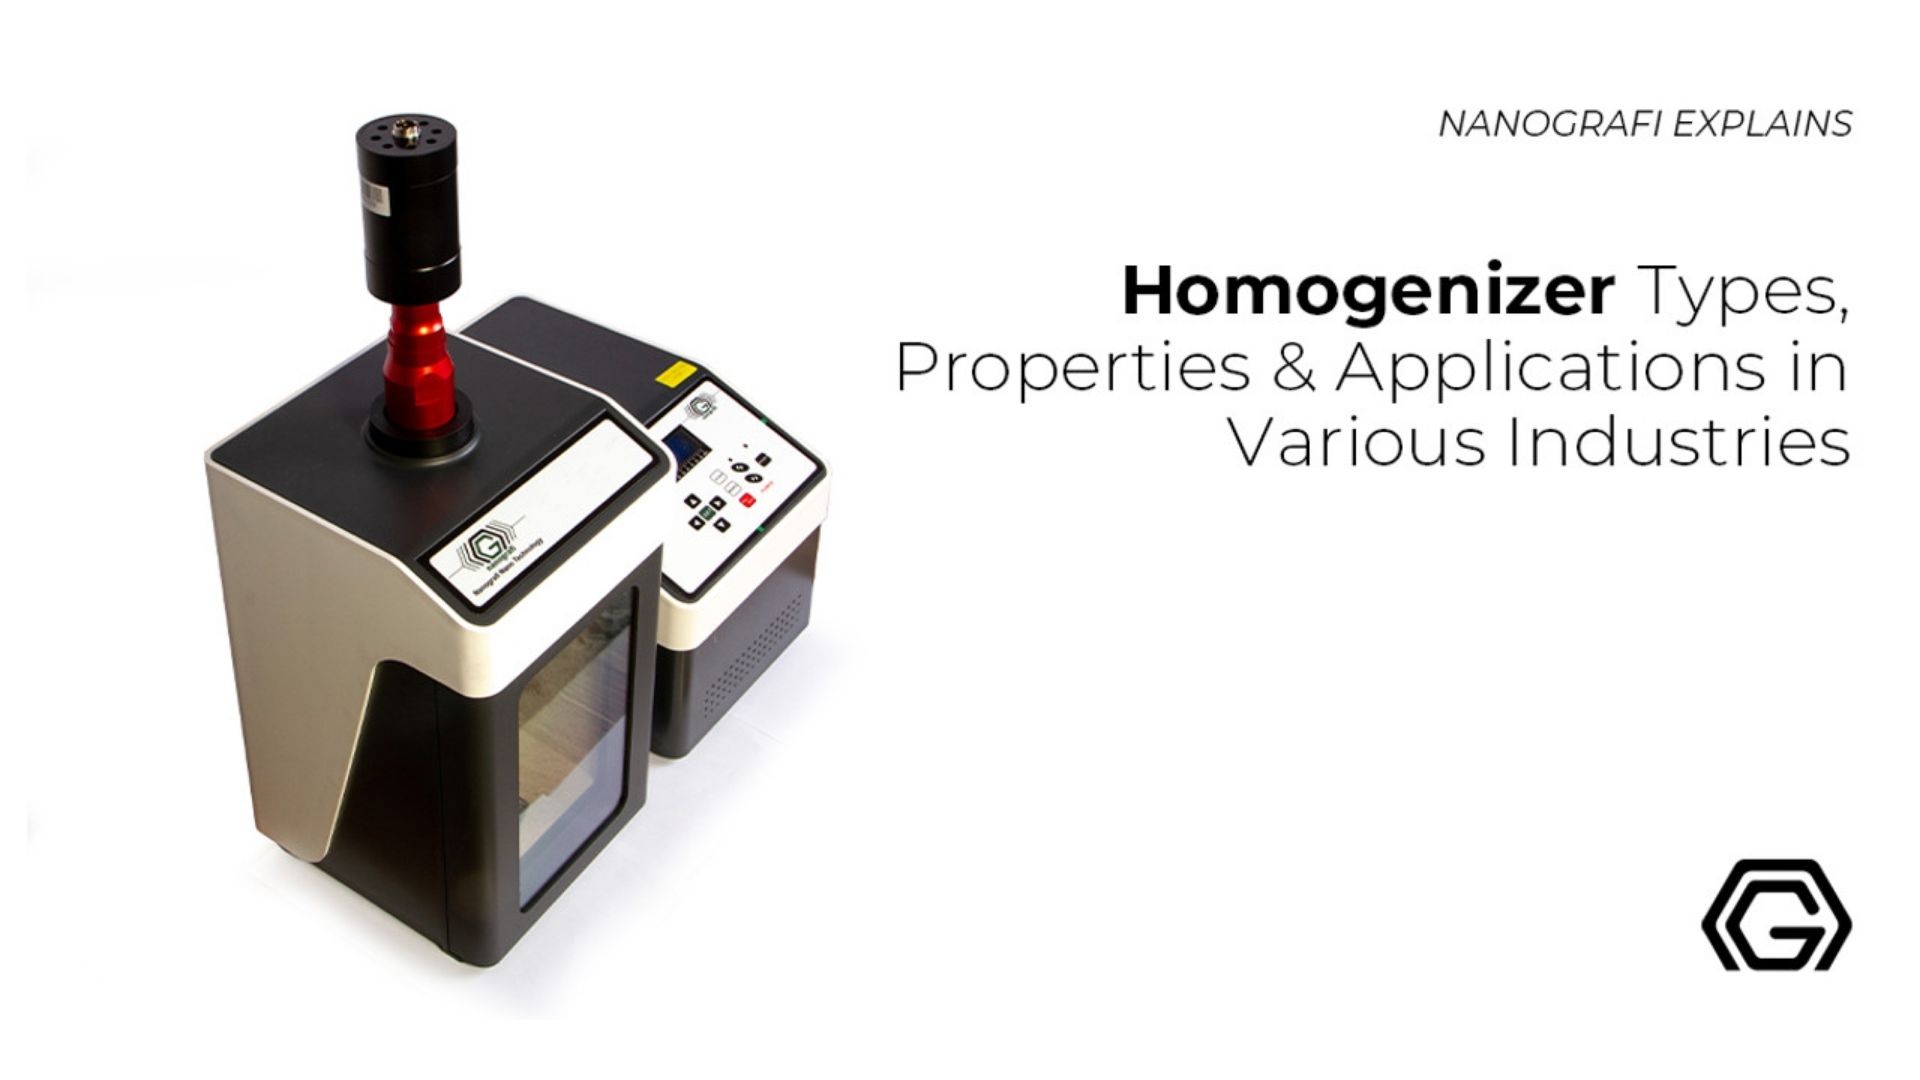 Homogenizer types, properties and applications in various industries